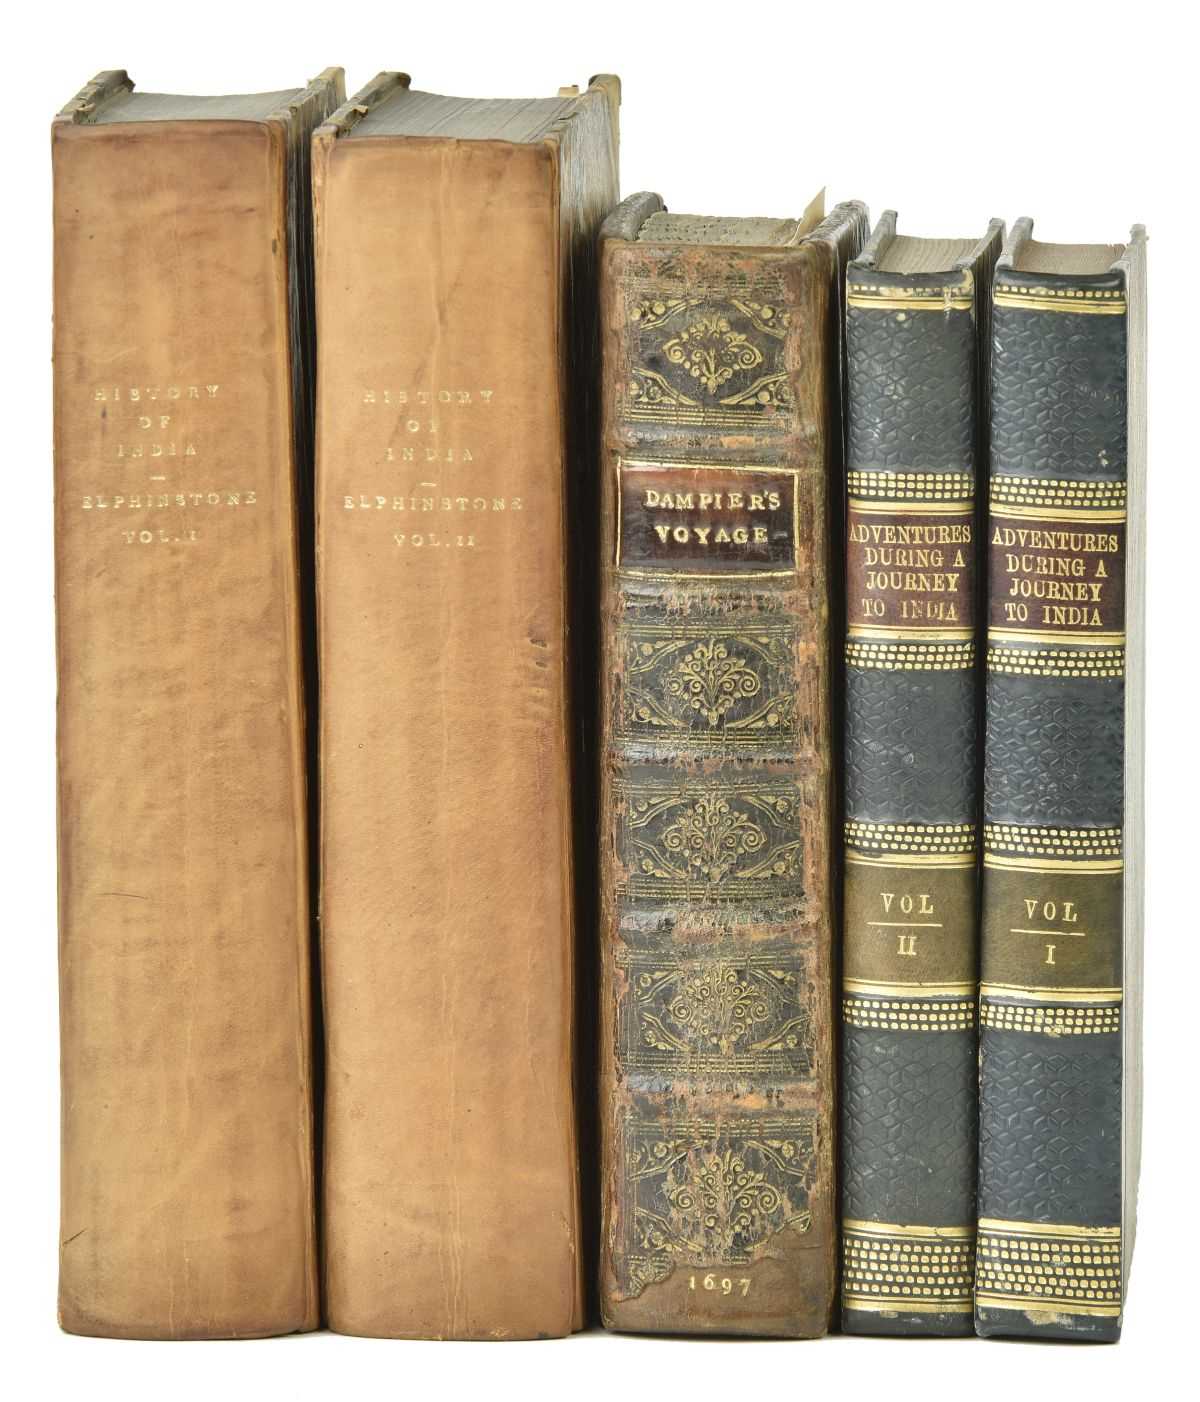 Lot 22 - Elphinstone (Mounstuart). The History of India, 2nd edition, 1843, ex libris William M. Gomm